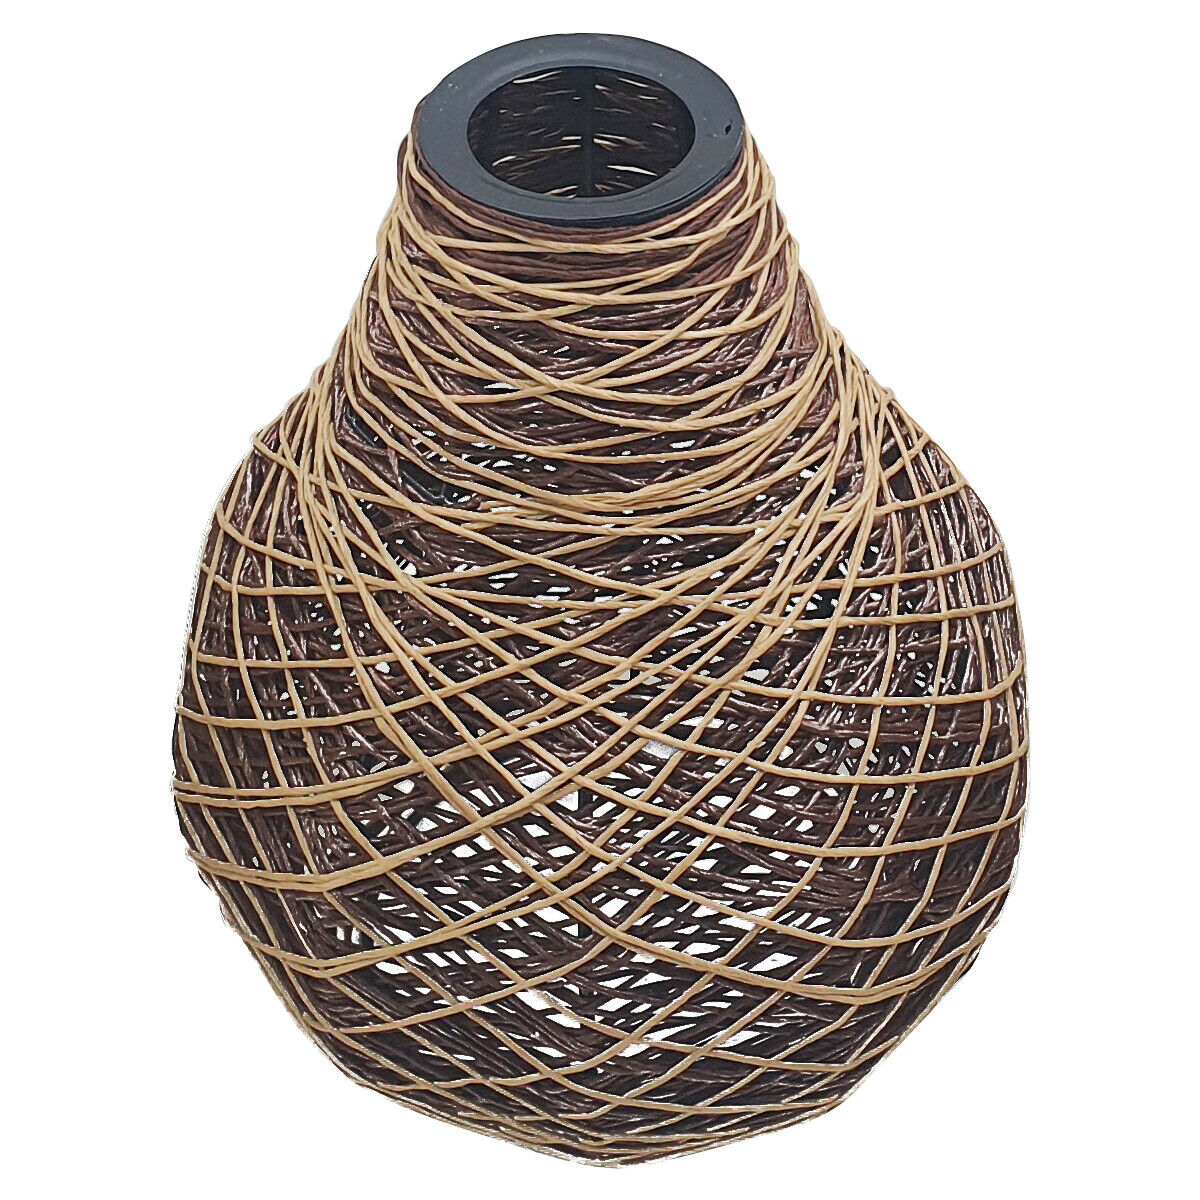 Decorative Modern Woven Rattan Pendant Lamp Cage Lighting Shade